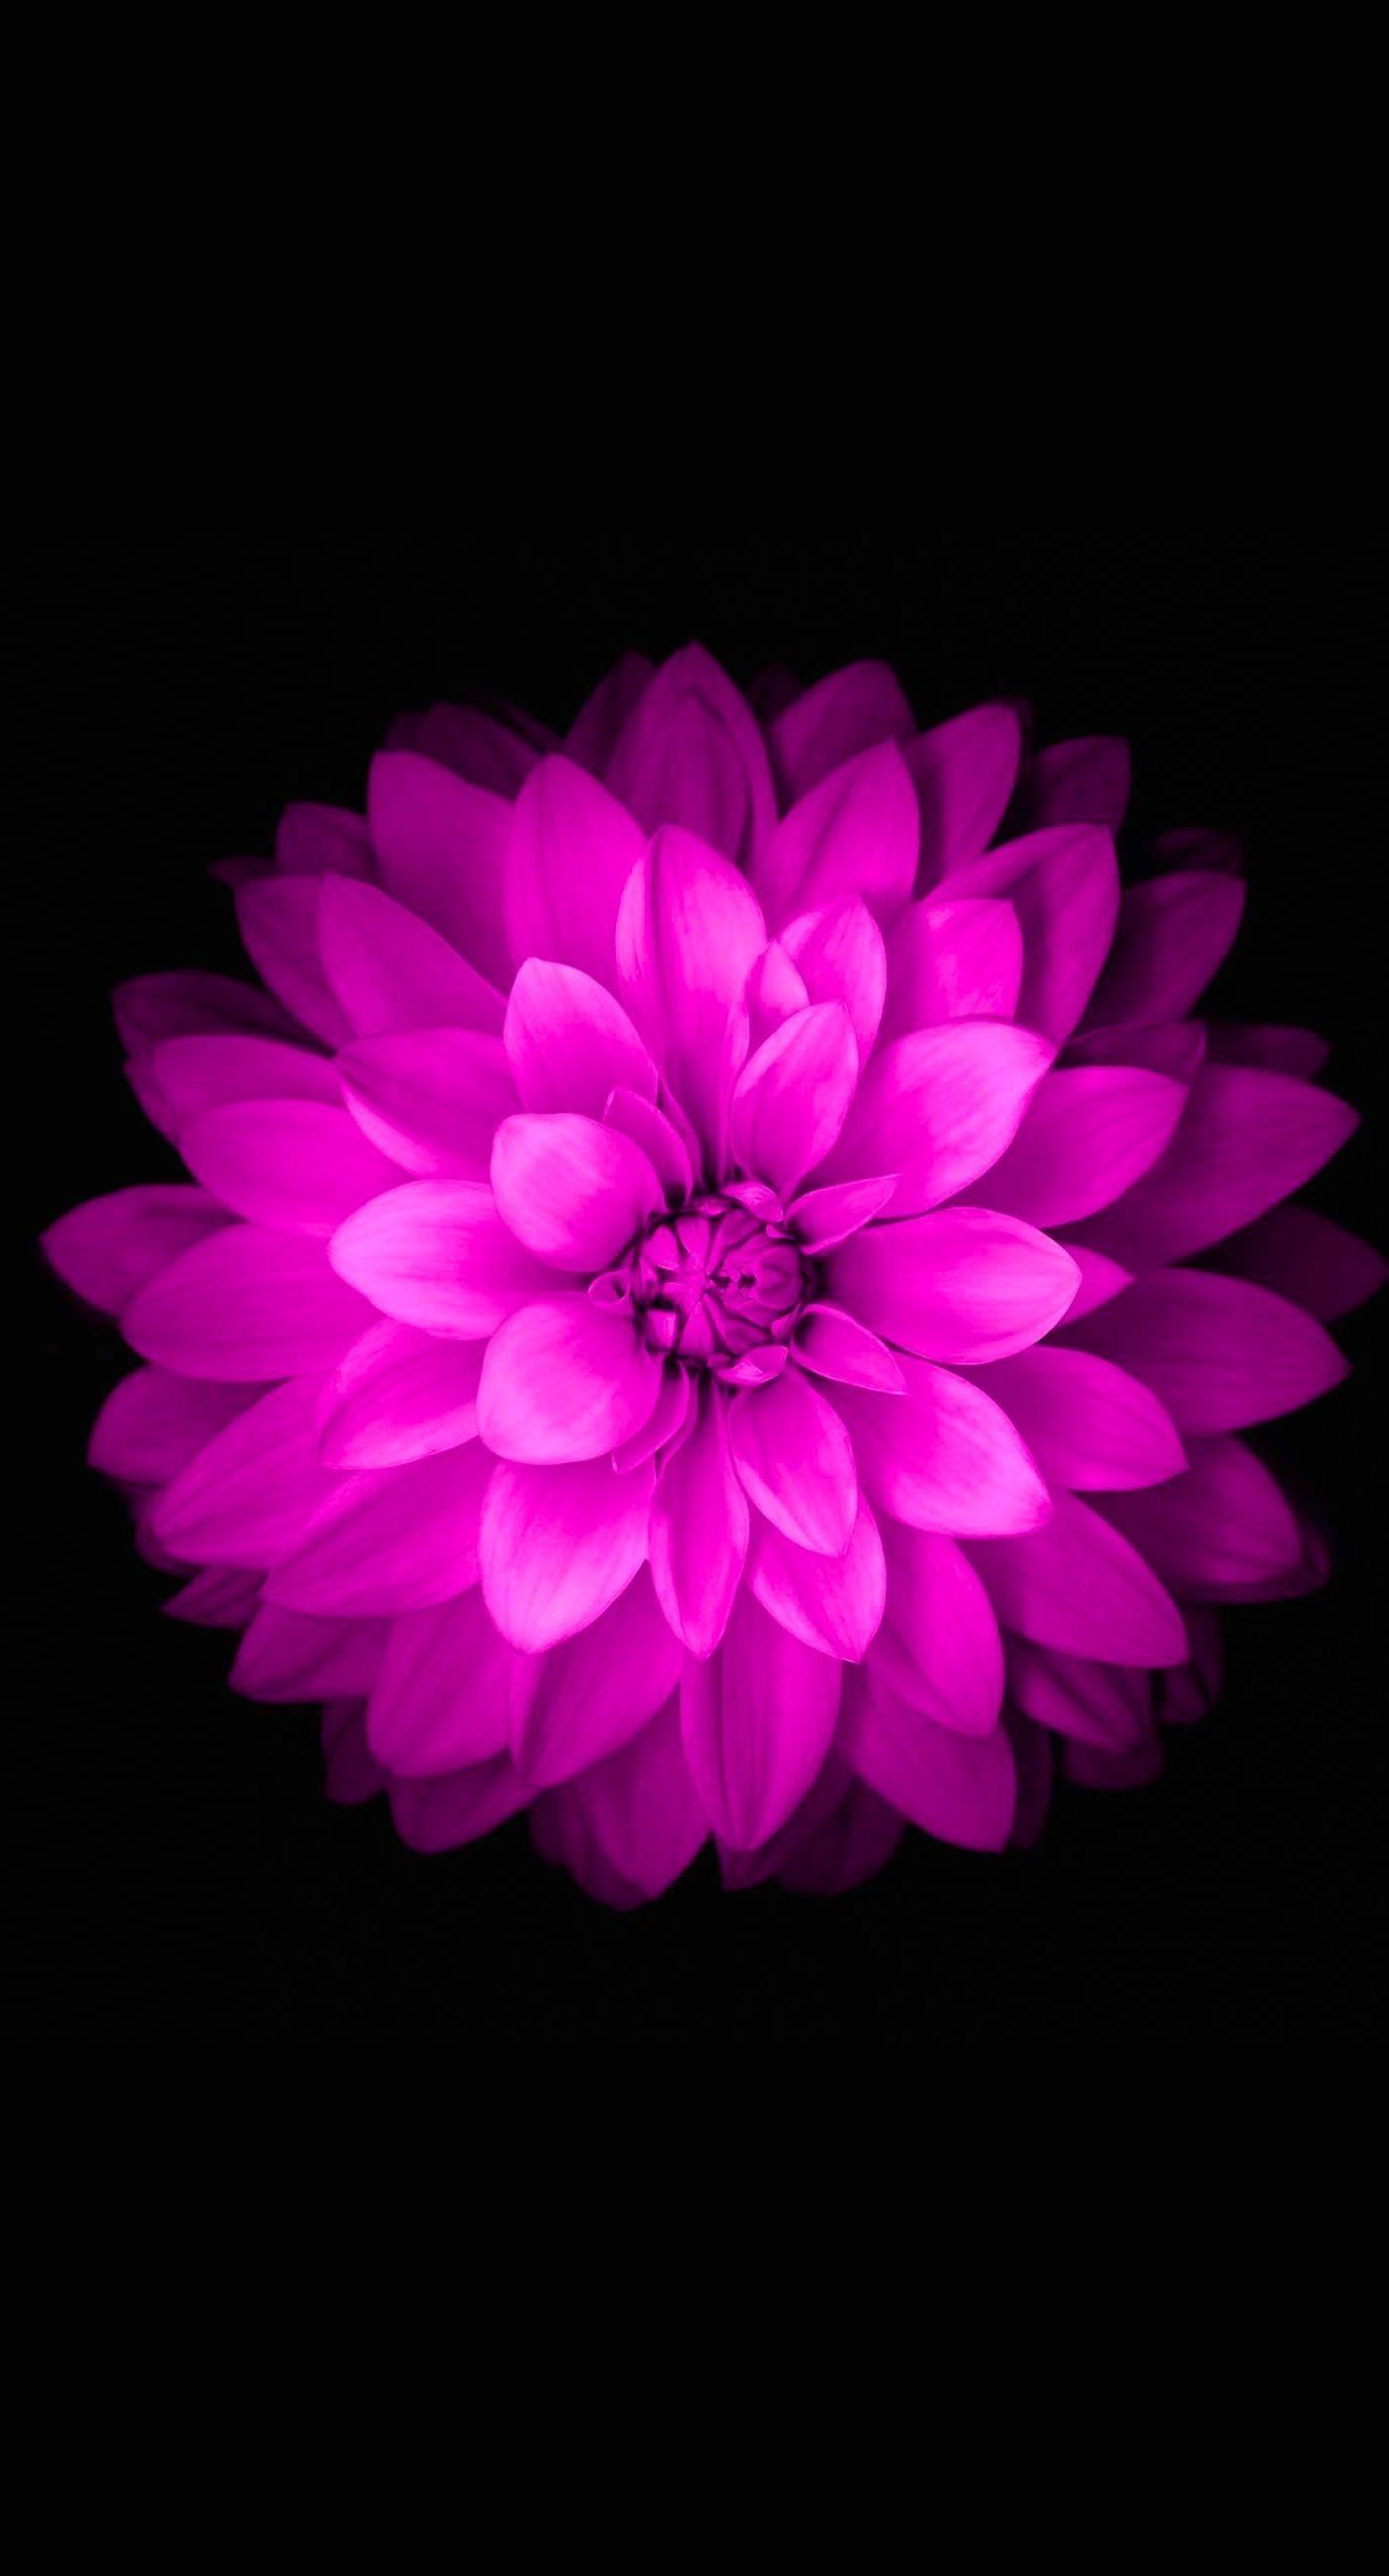 Purple Flower Iphone Wallpapers Top Free Purple Flower Iphone Backgrounds Wallpaperaccess